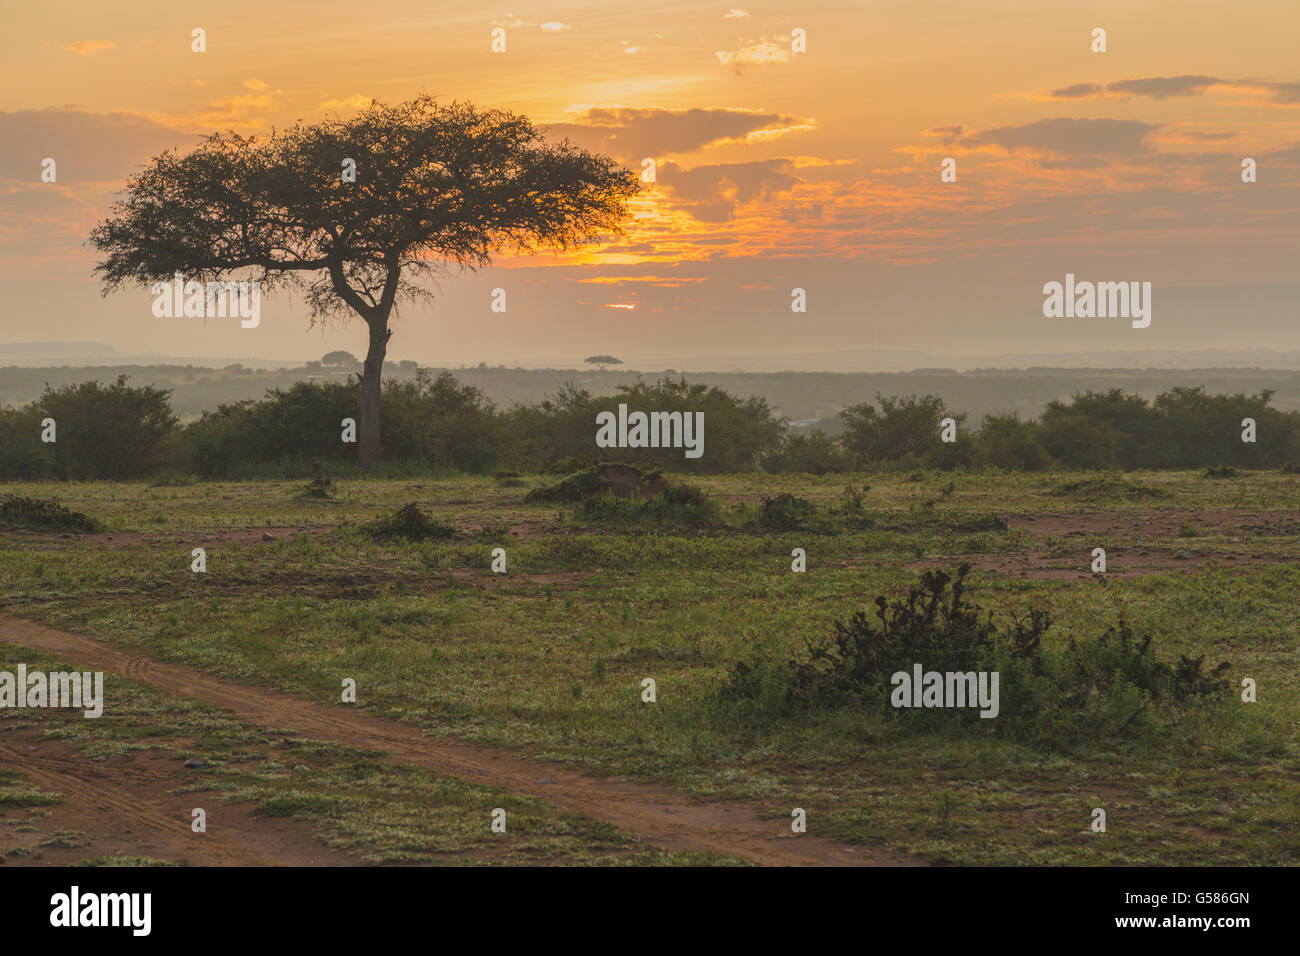 Sunrise over Masai Mara, fog is in the air and a big acacia tree in the foreground, Masai Mara, Kenya, Africa Stock Photo